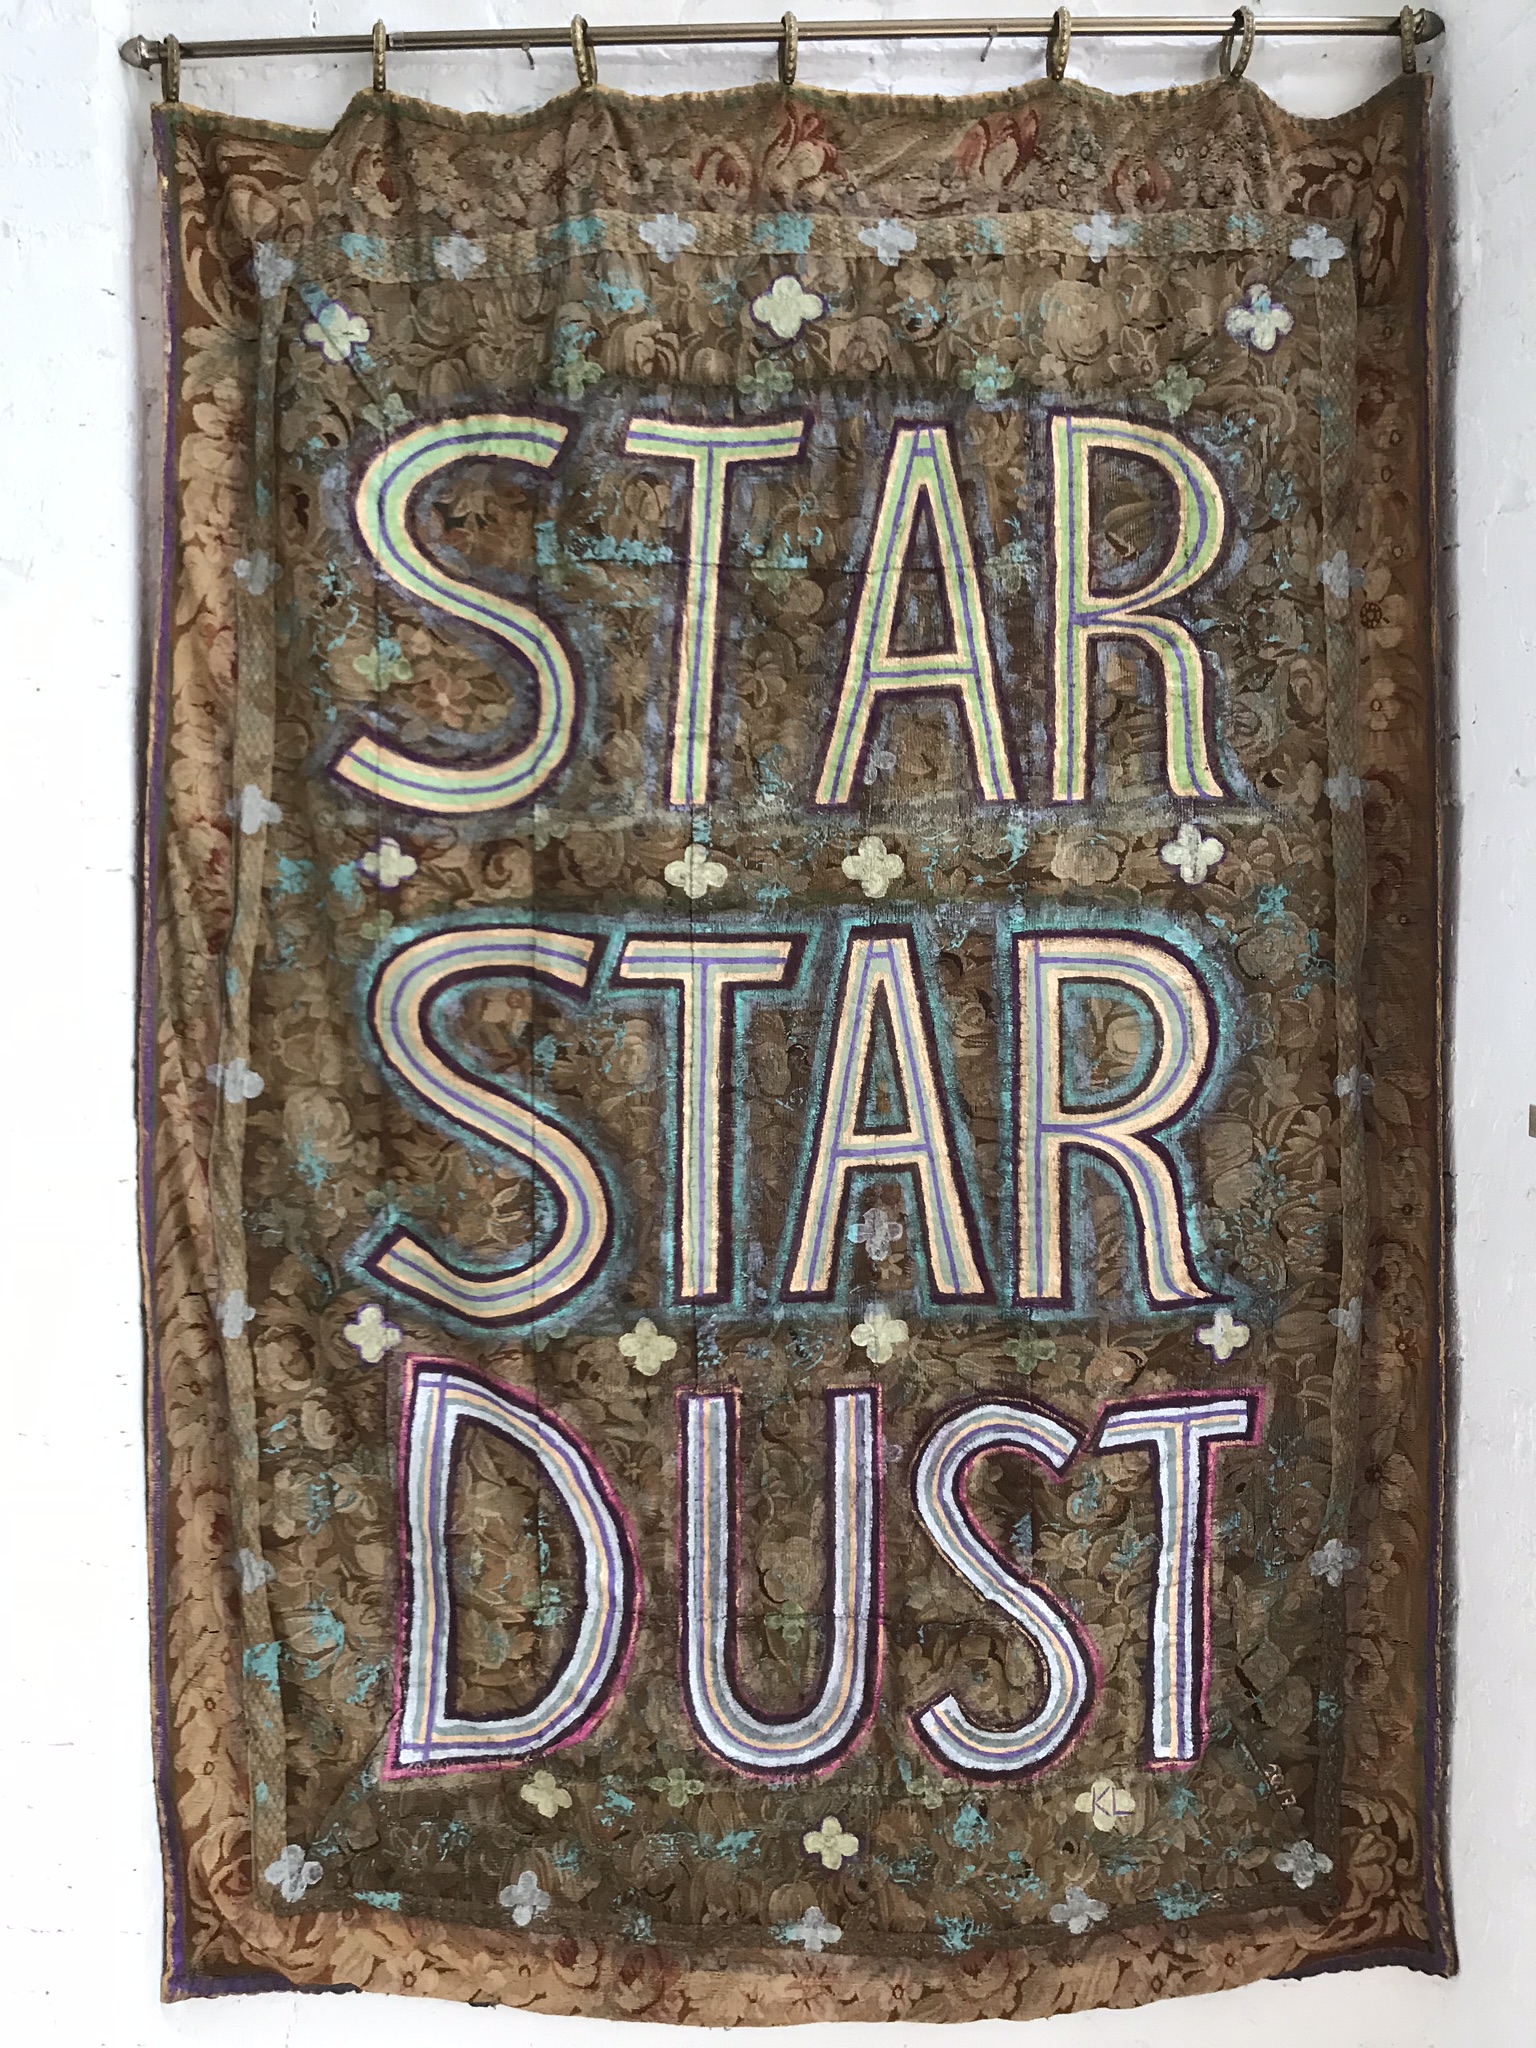 Star Dust mixed media art